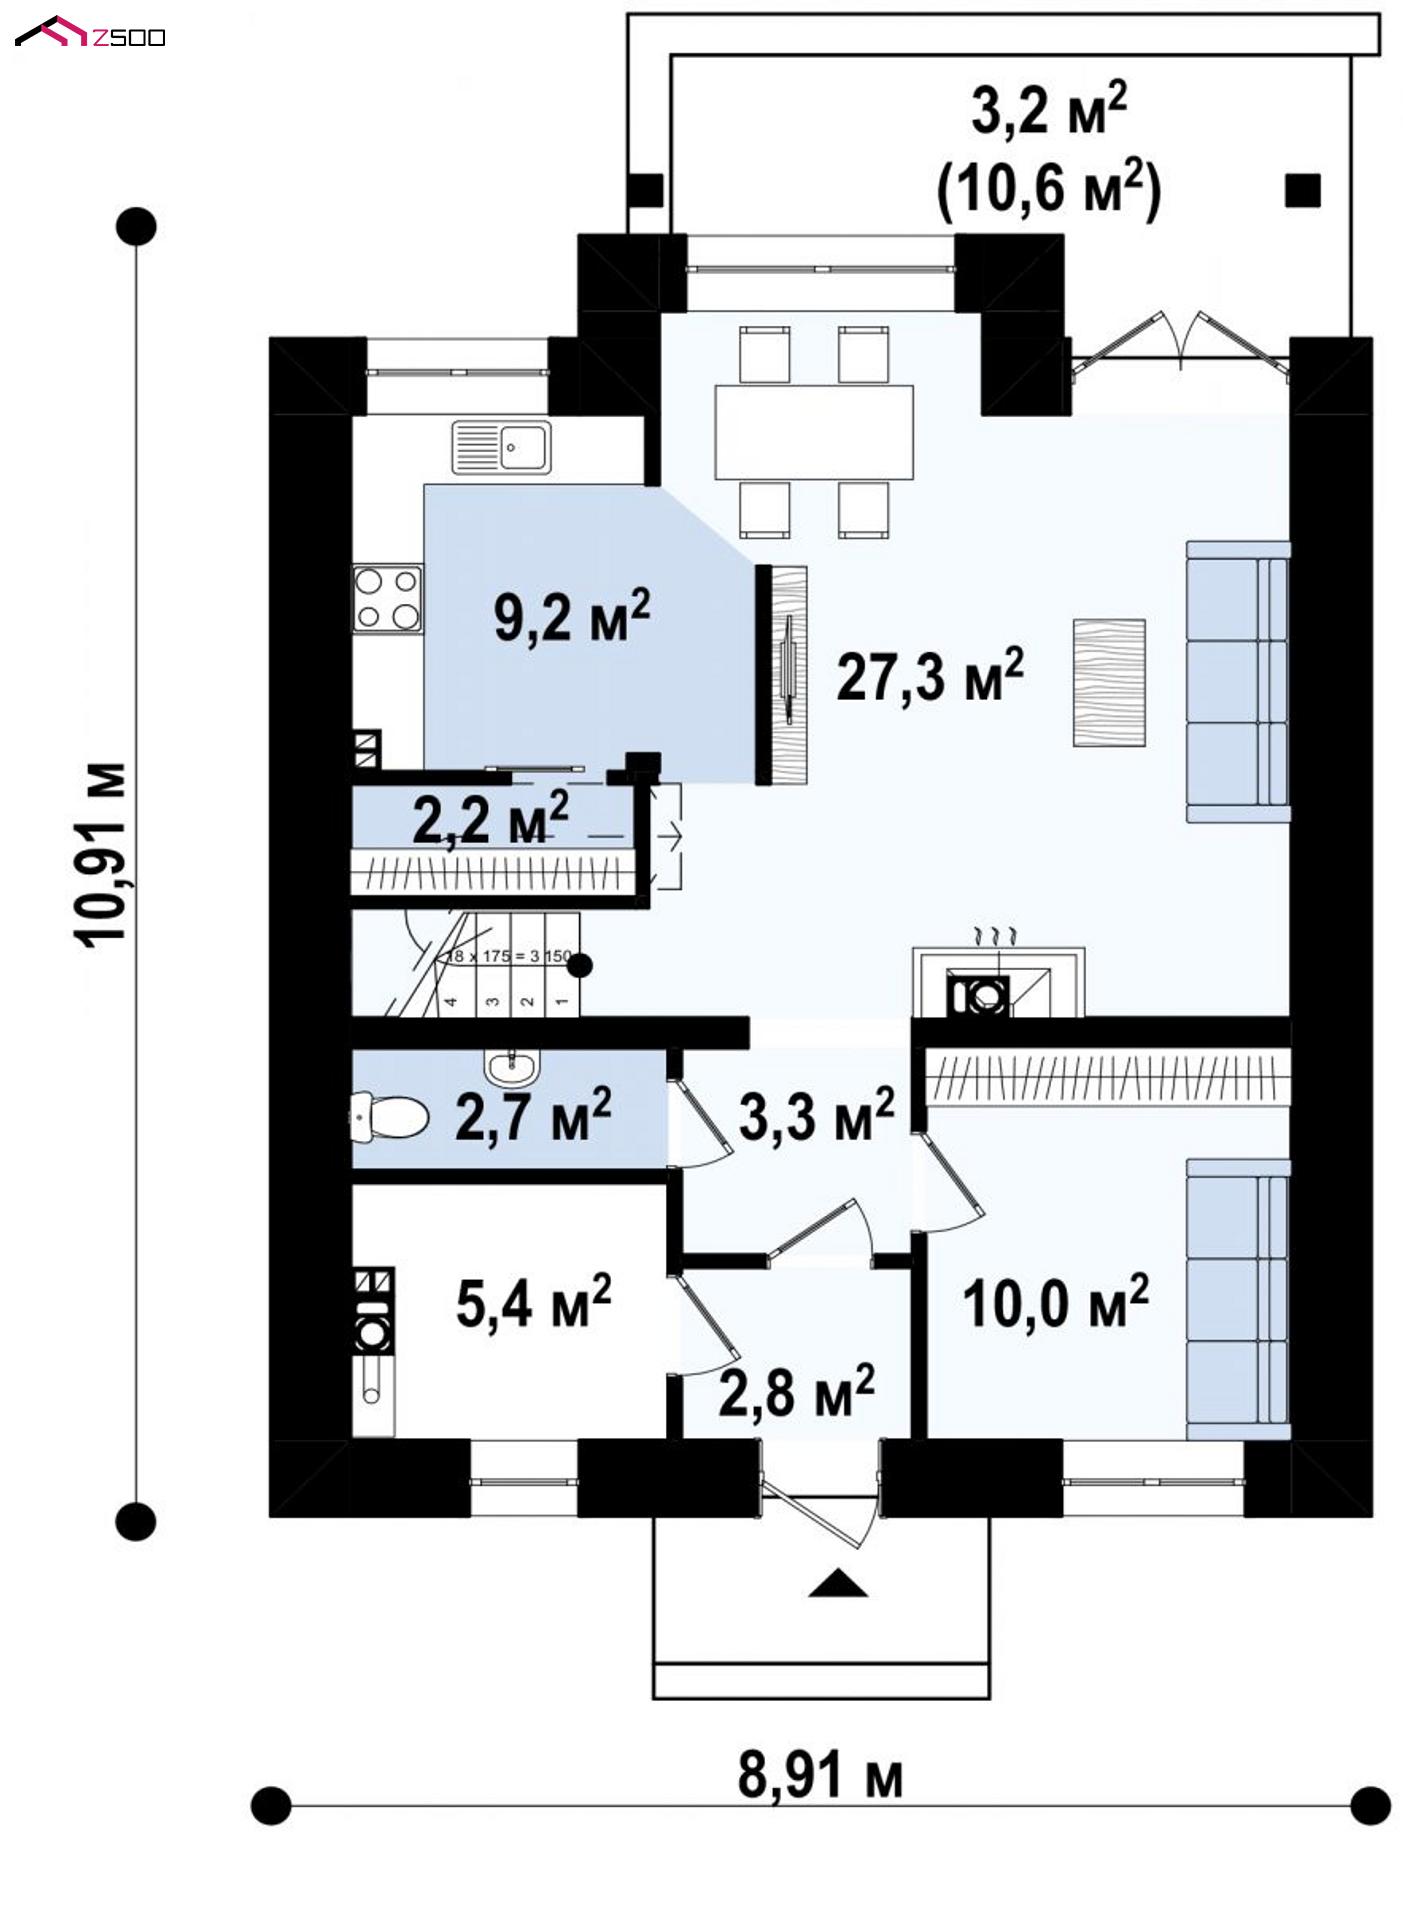 1-ый этаж - план проекта Z99